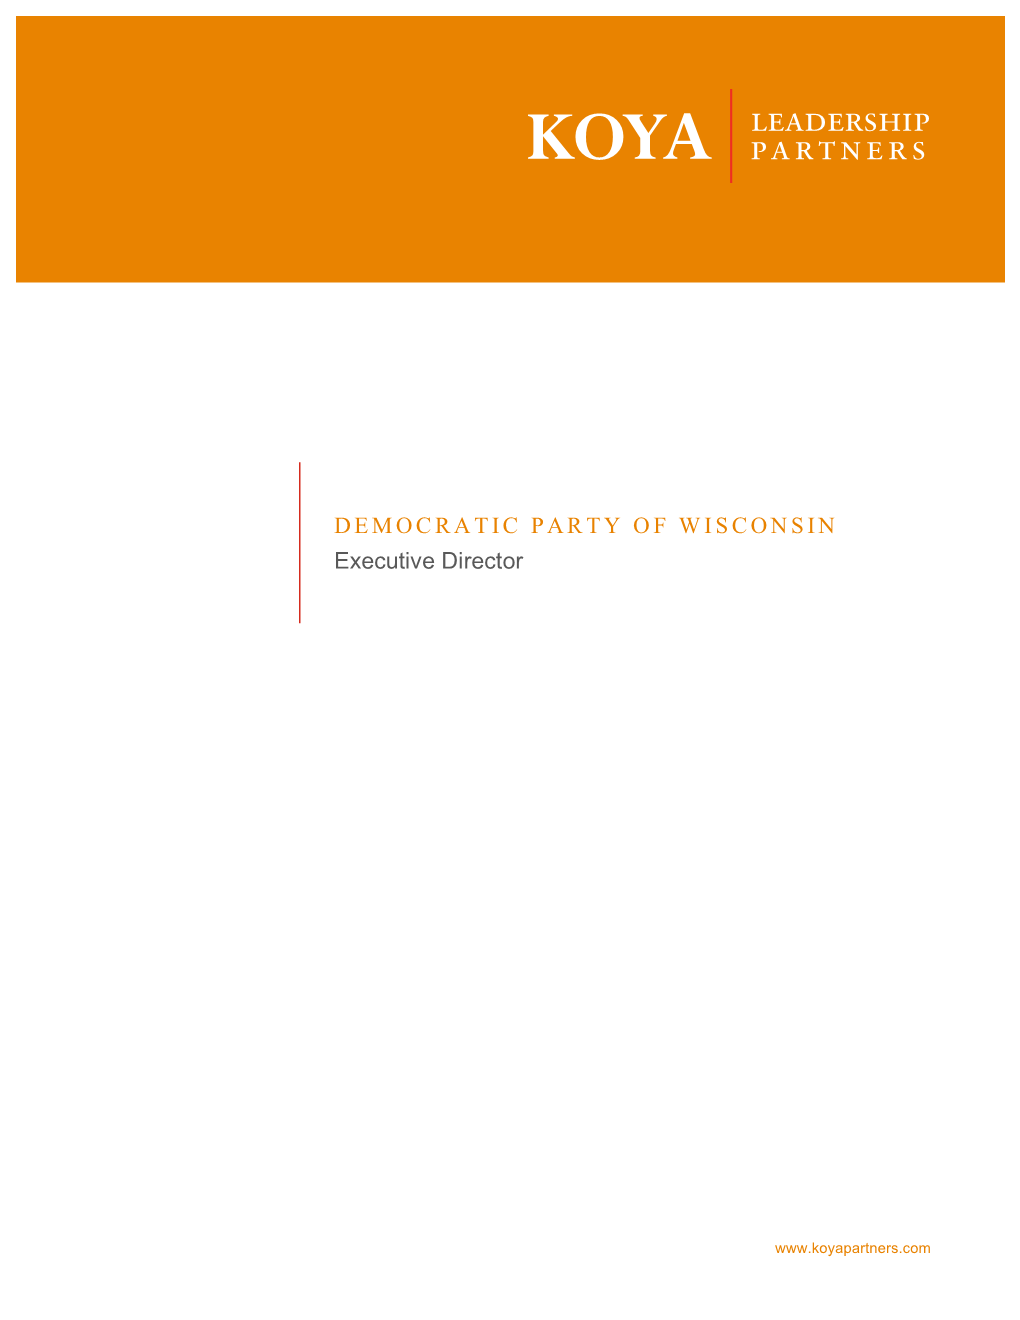 DEMOCRATIC PARTY of WISCONSIN Executive Director